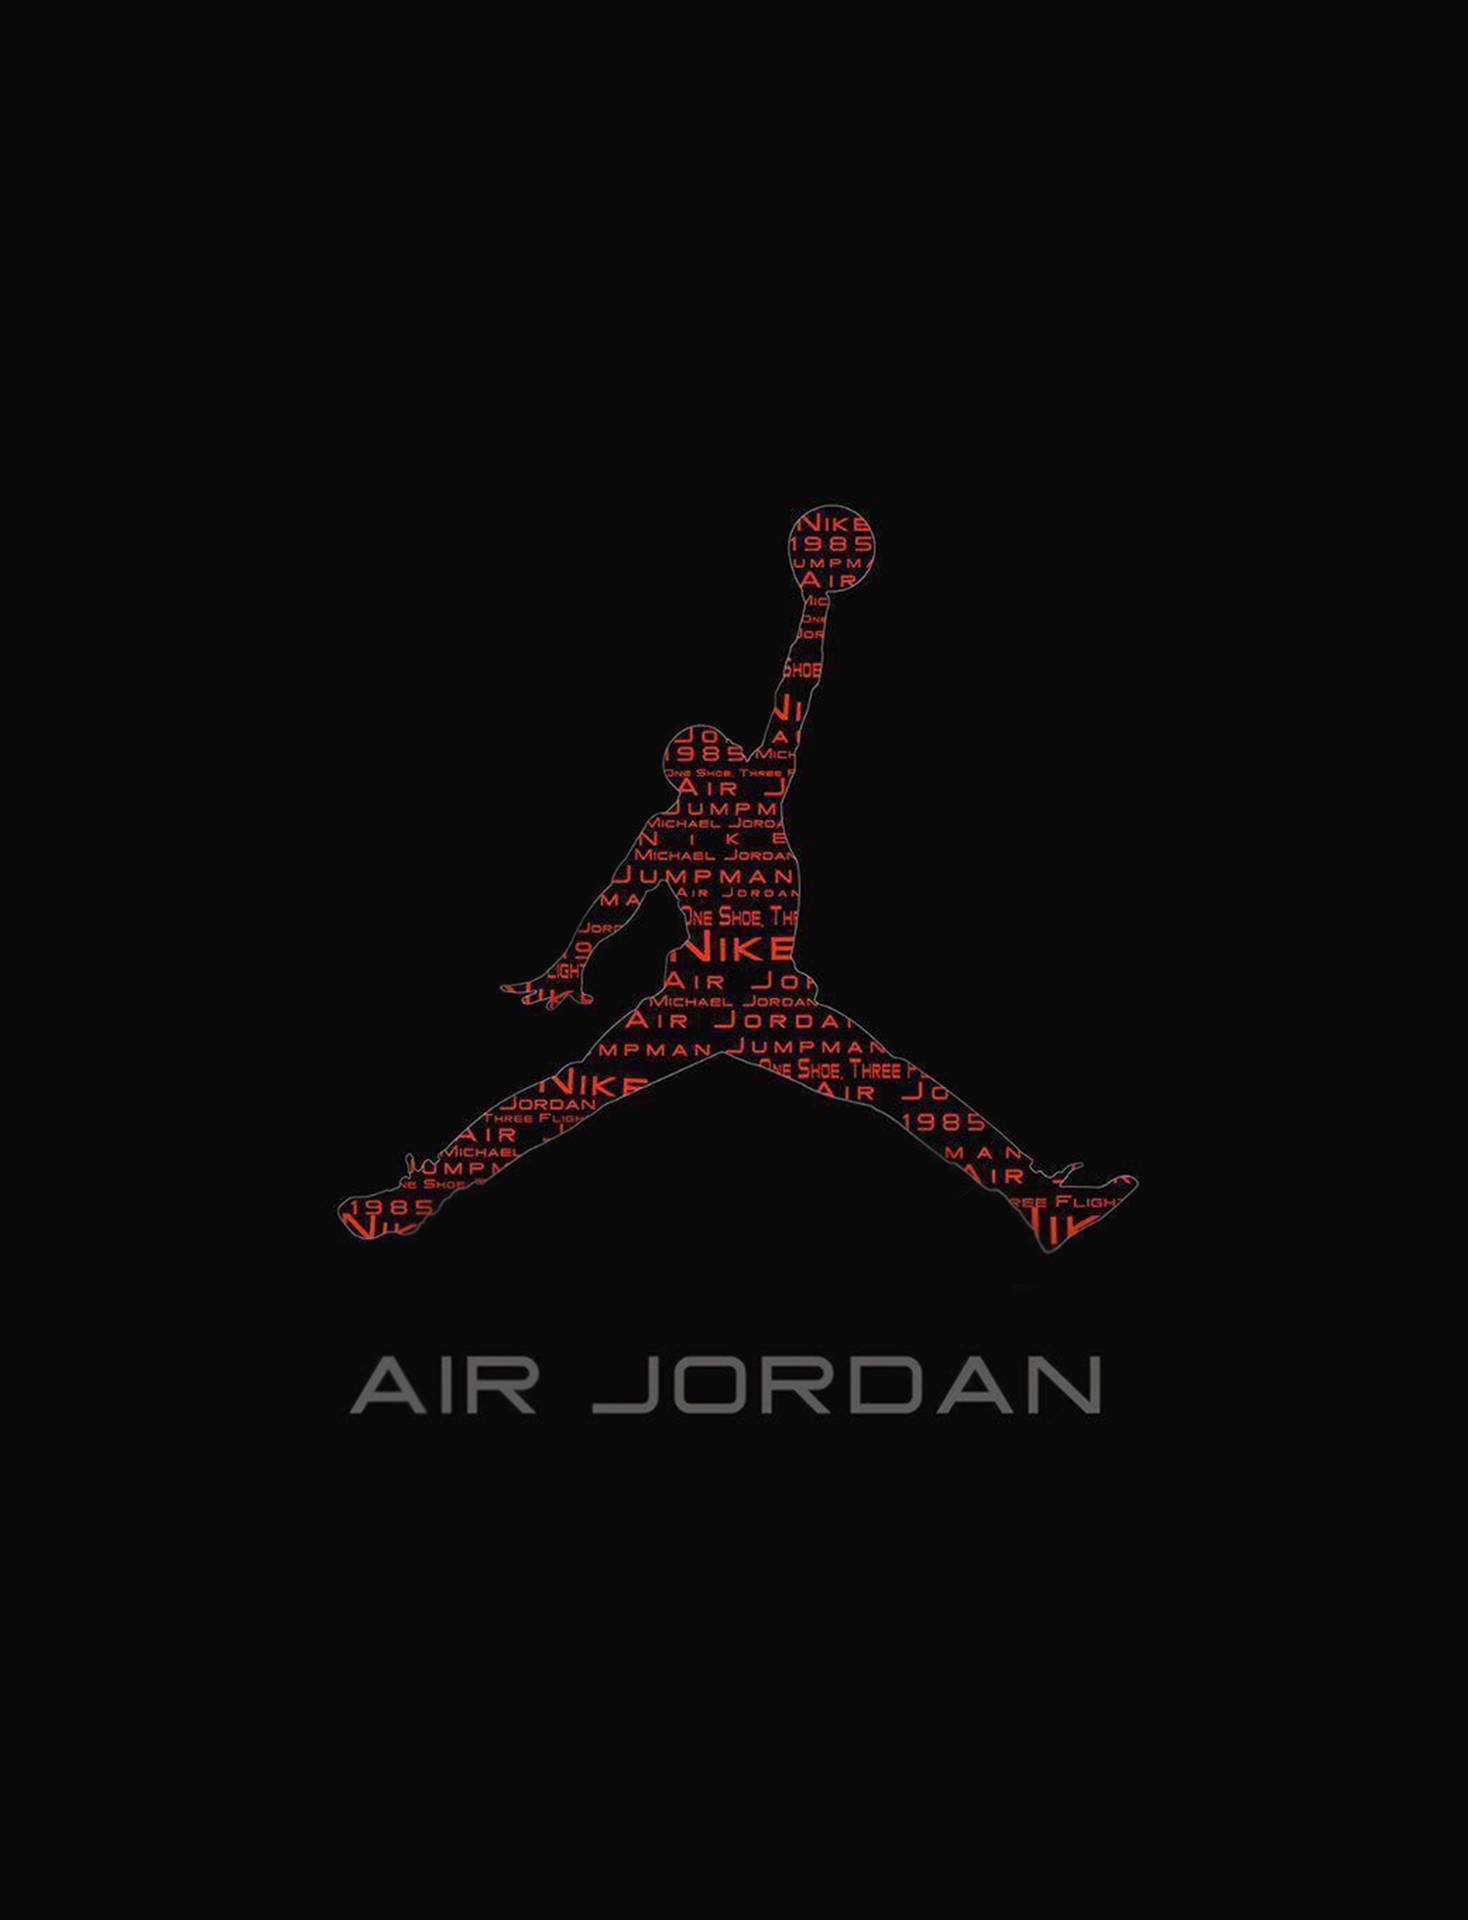 Air Jordan 1920X2511 Wallpaper and Background Image